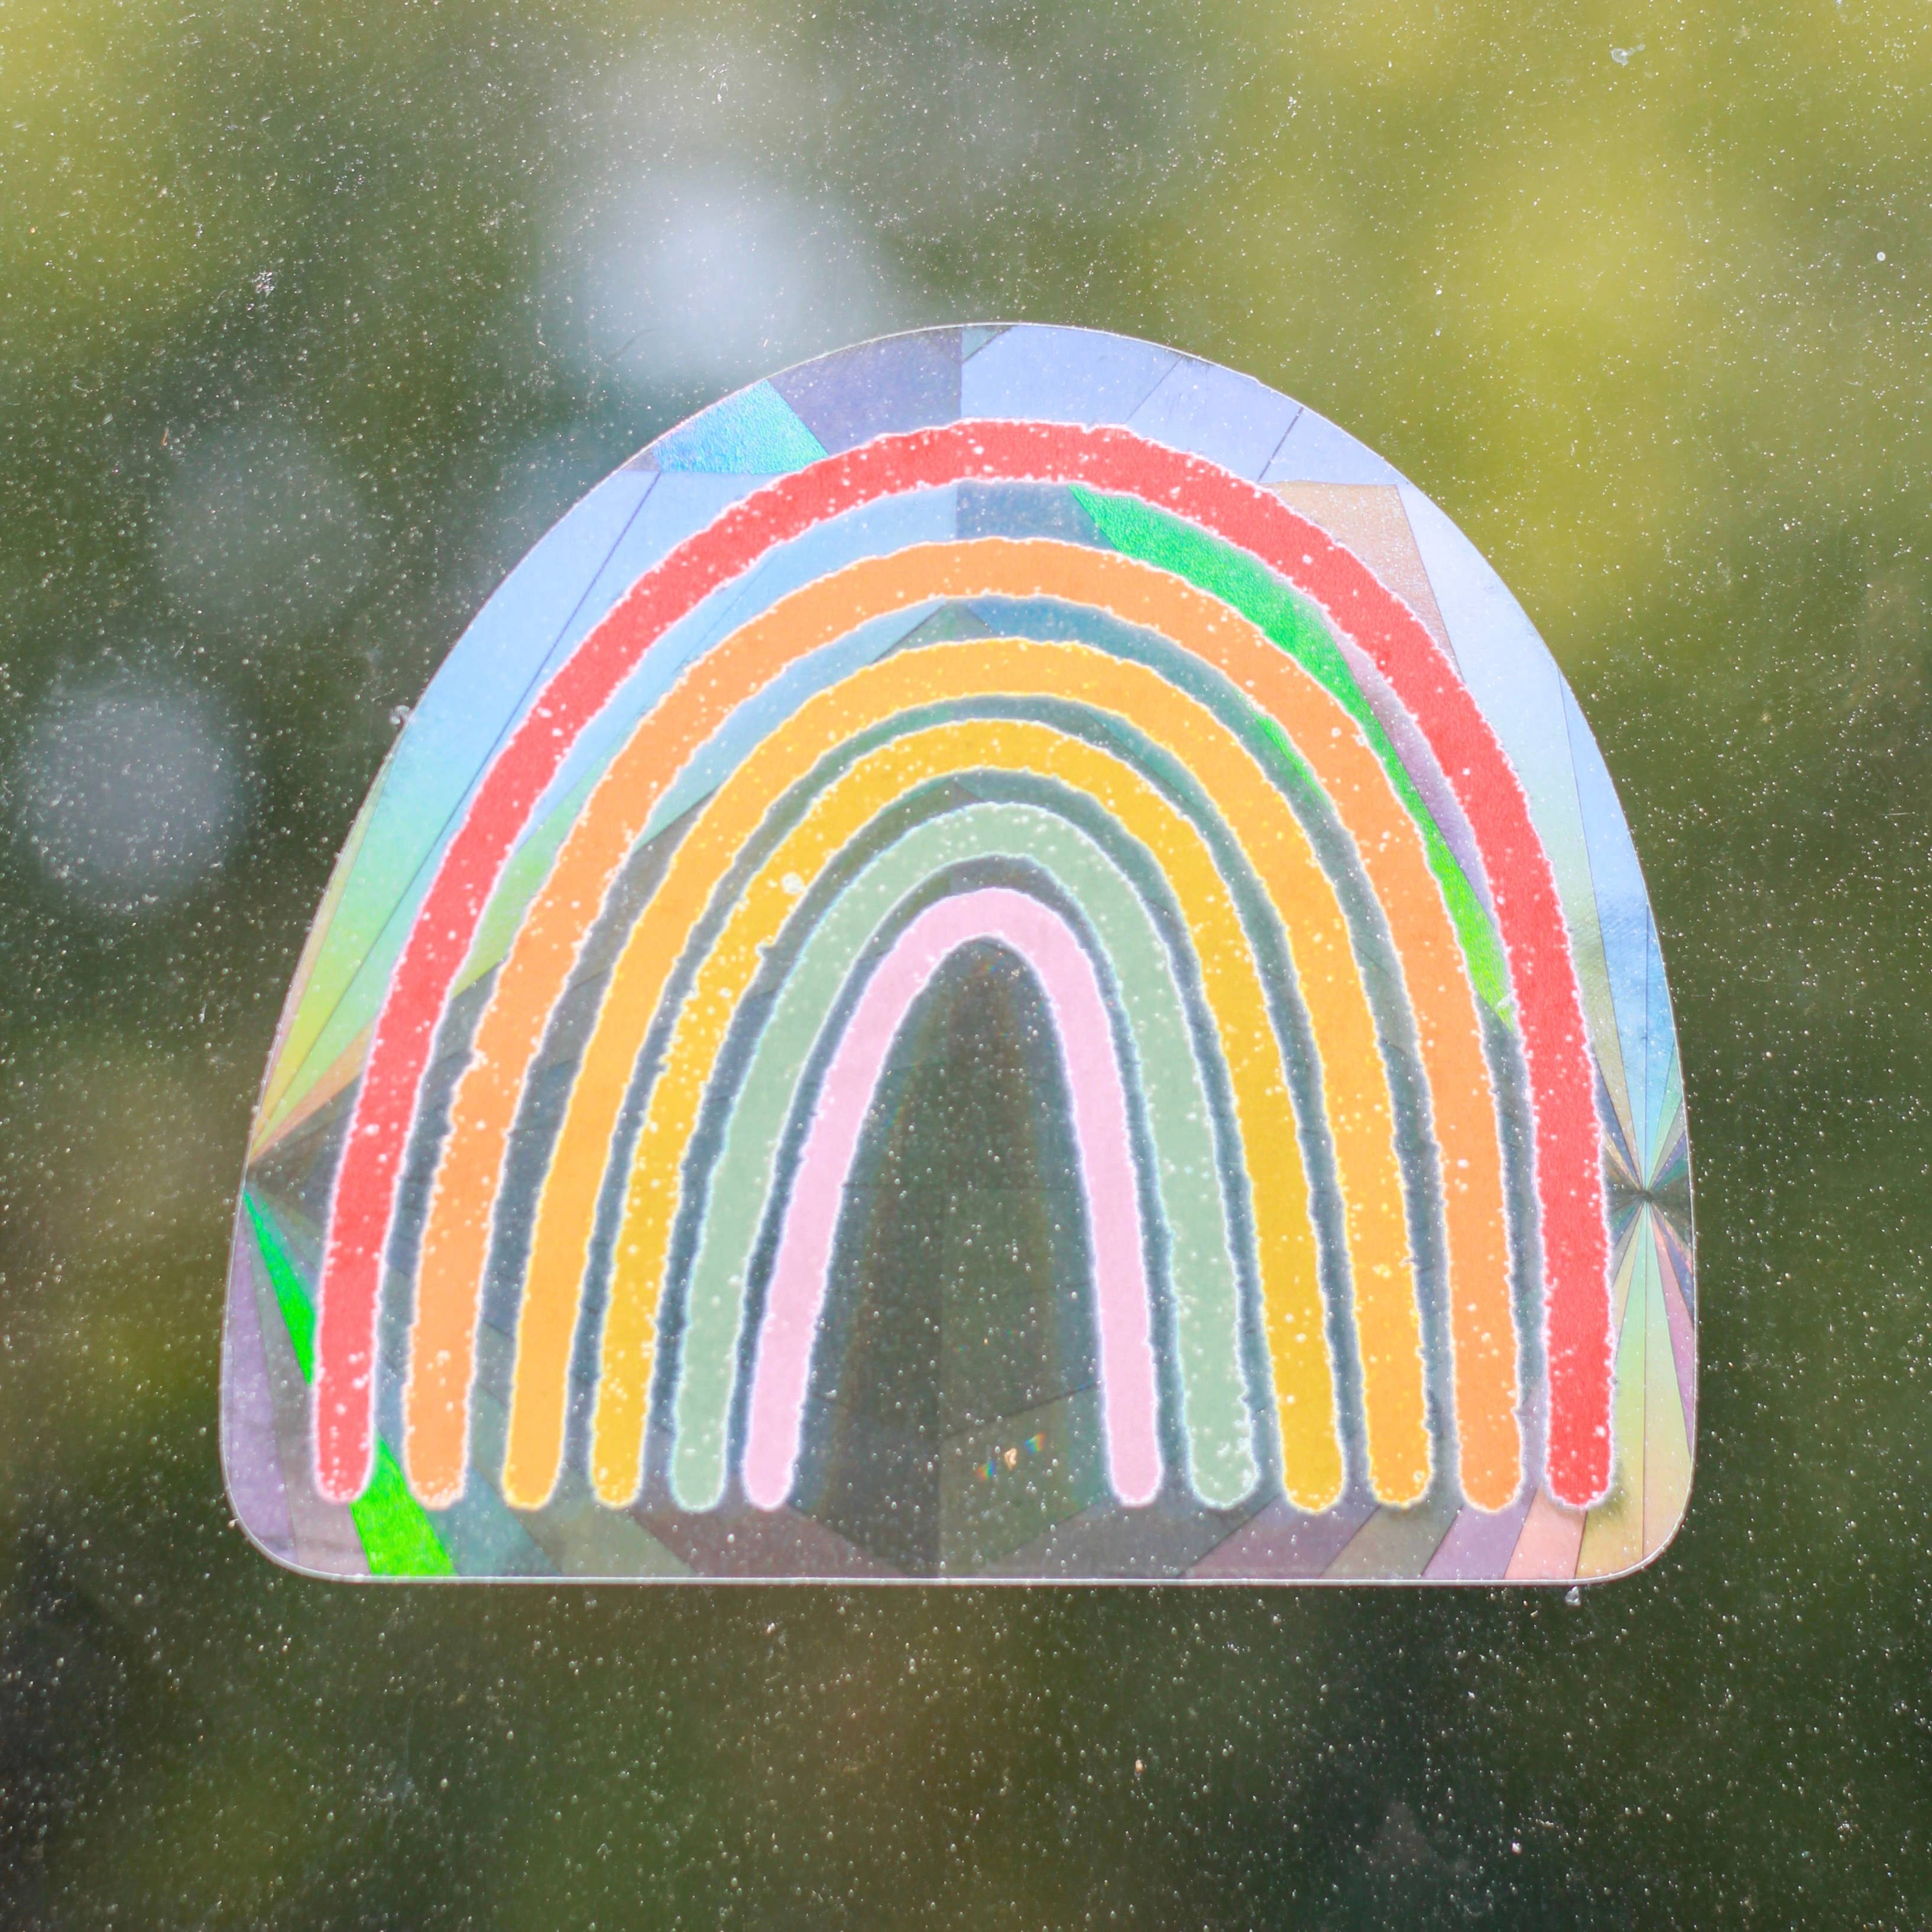 Rainbow Sun Catcher Window Decal, 5x4 in.